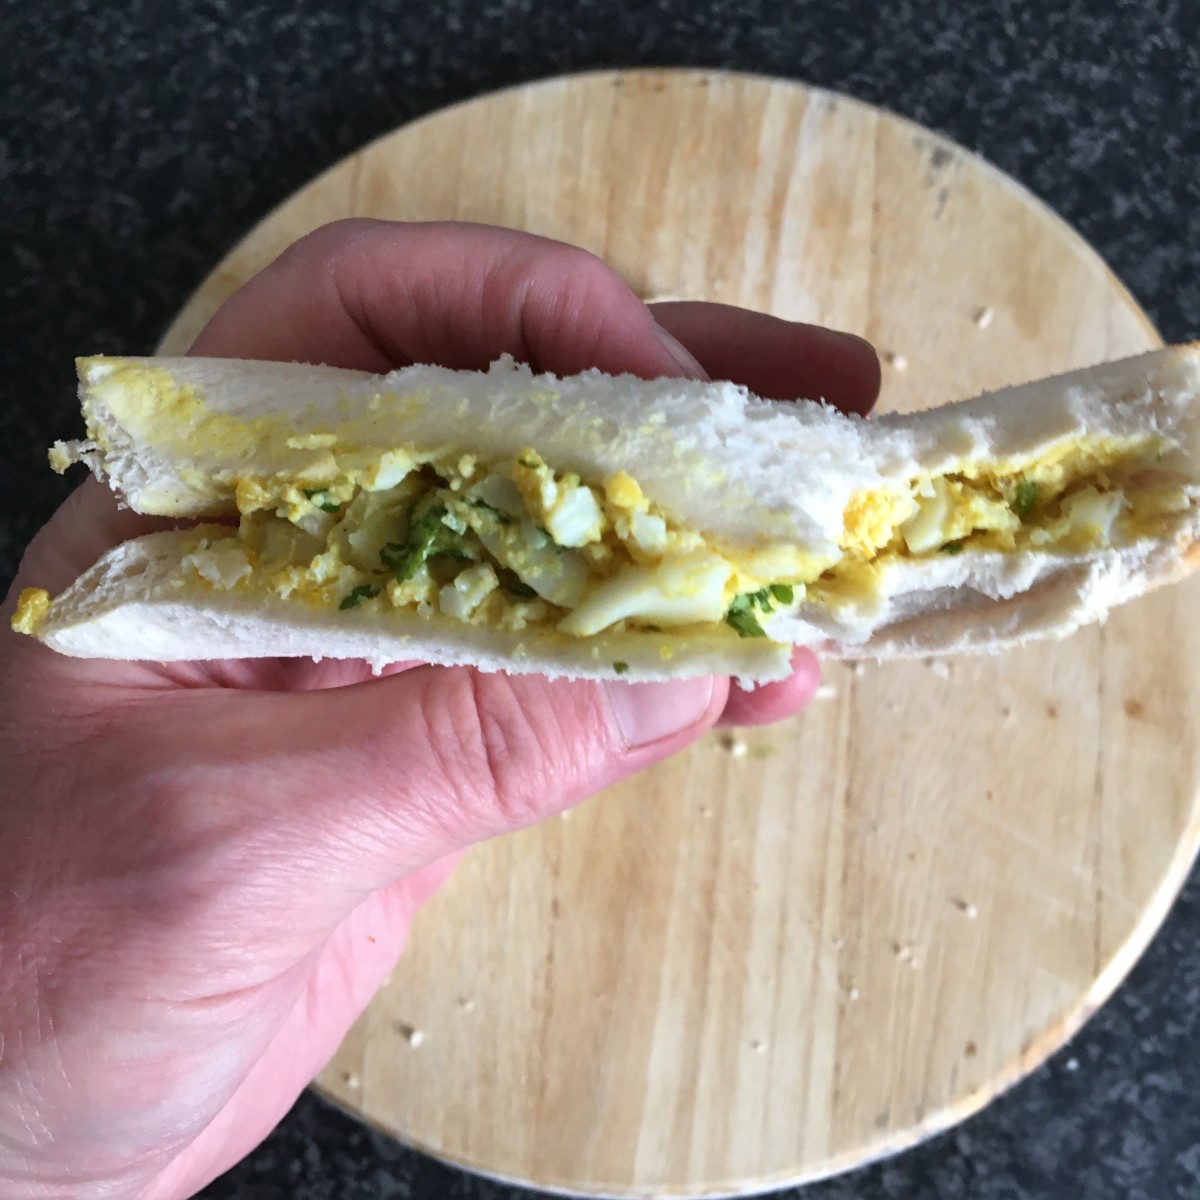 Hard boiled duck egg, garlic and parsley sandwich